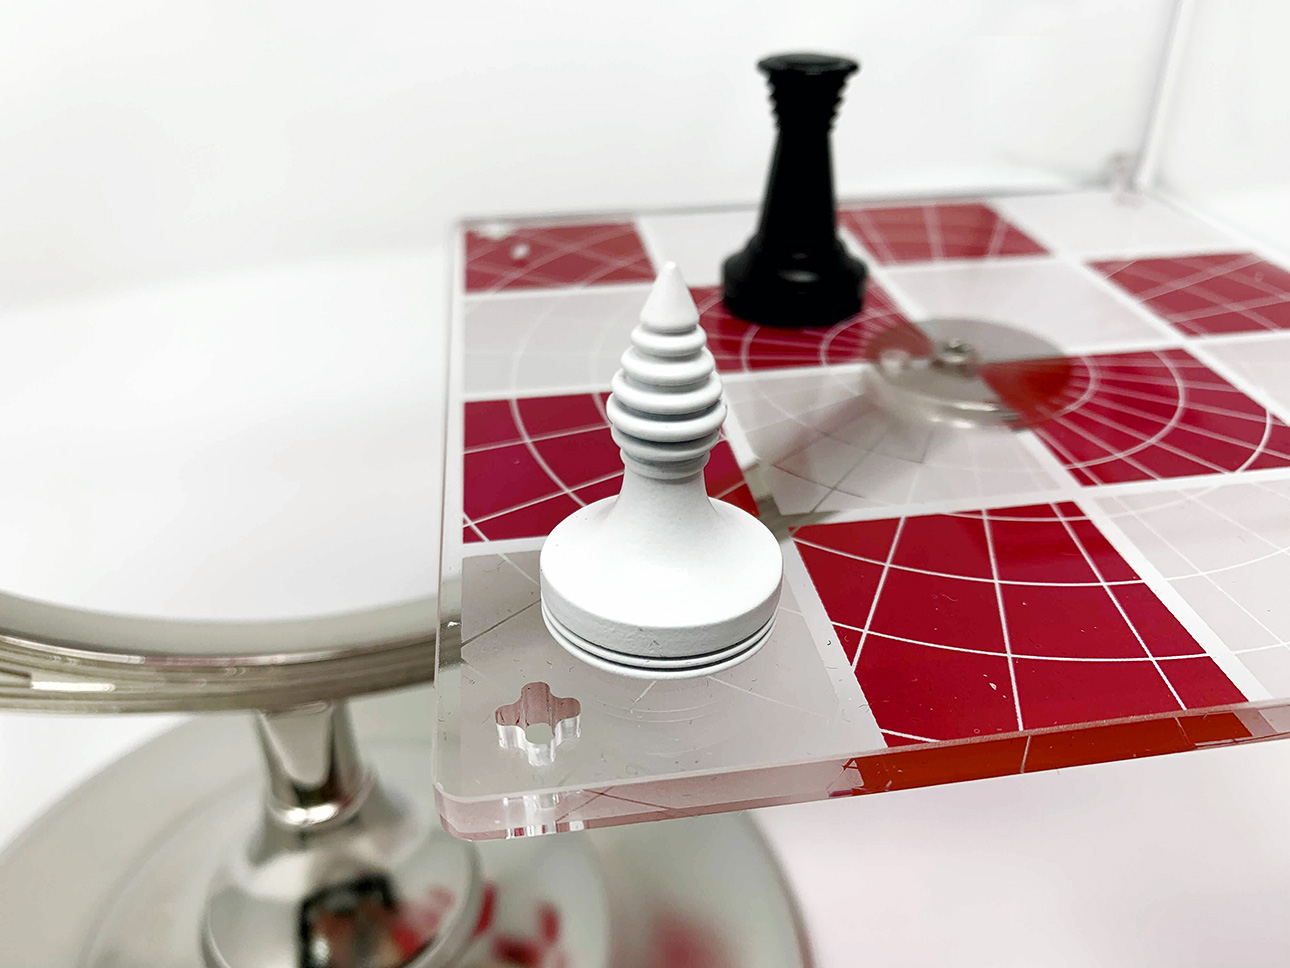 Star Trek Tridimensional Chess Set at